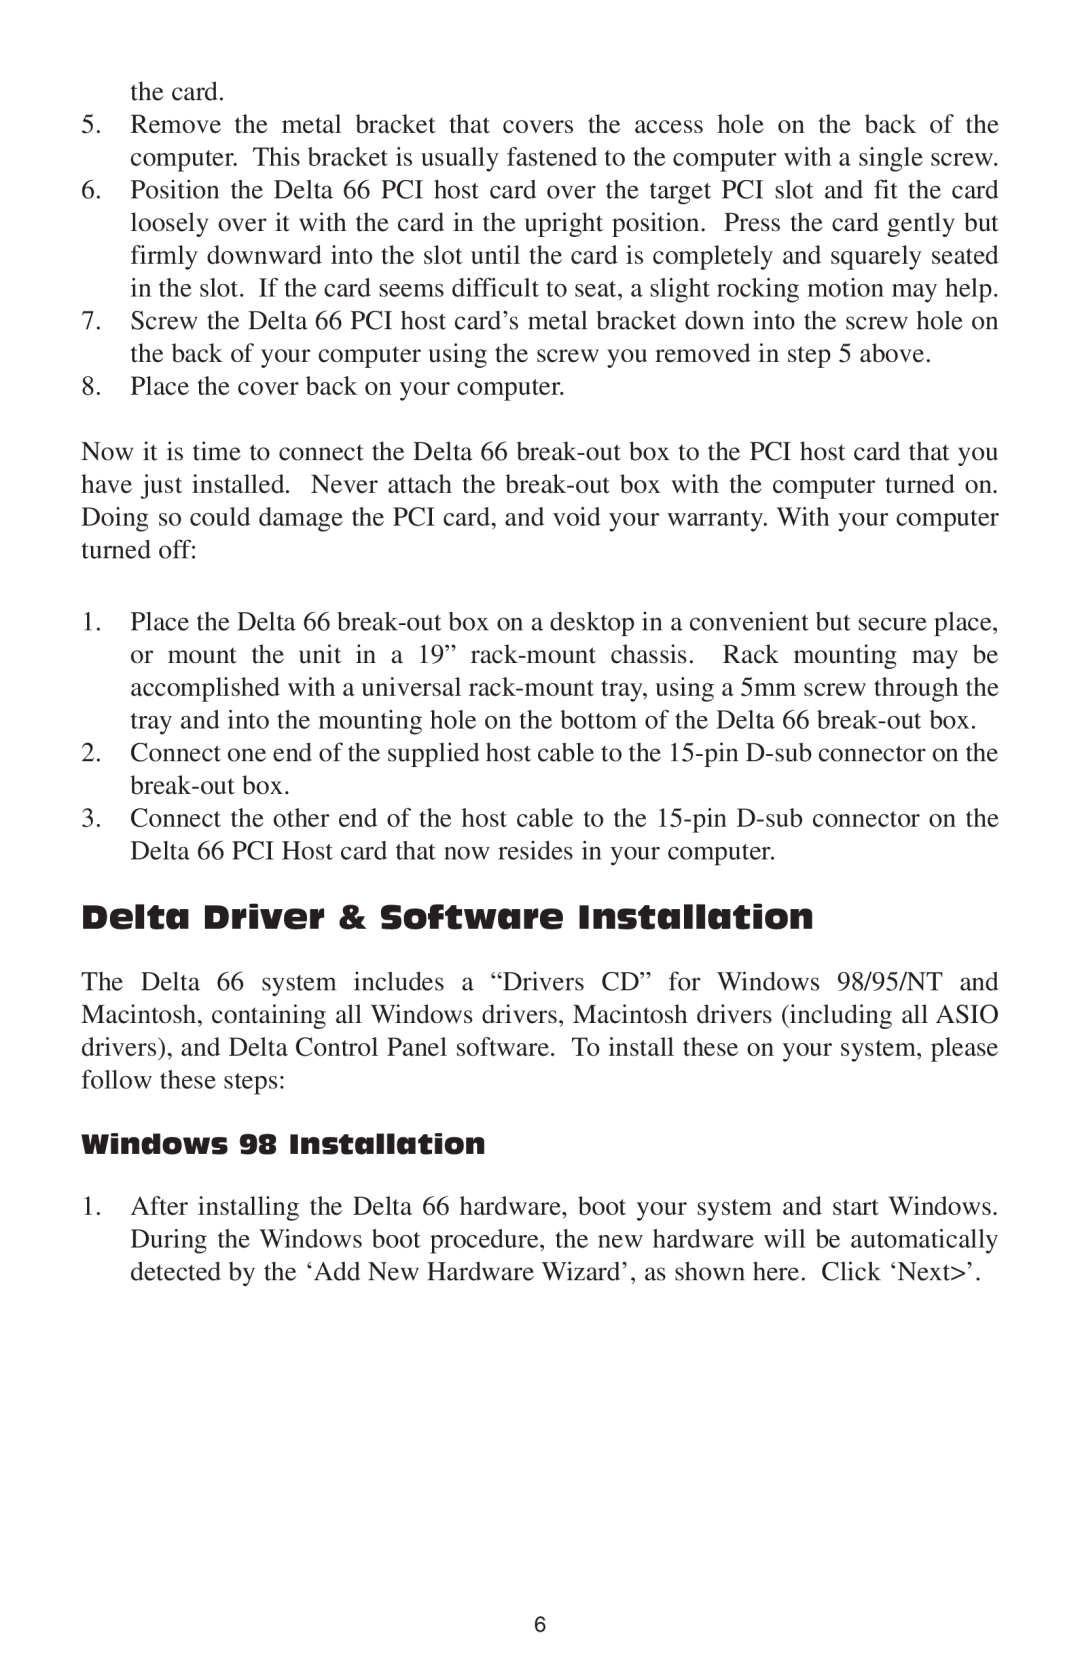 M-Audio 66 manual Delta Driver & Software Installation, Windows 98 Installation 